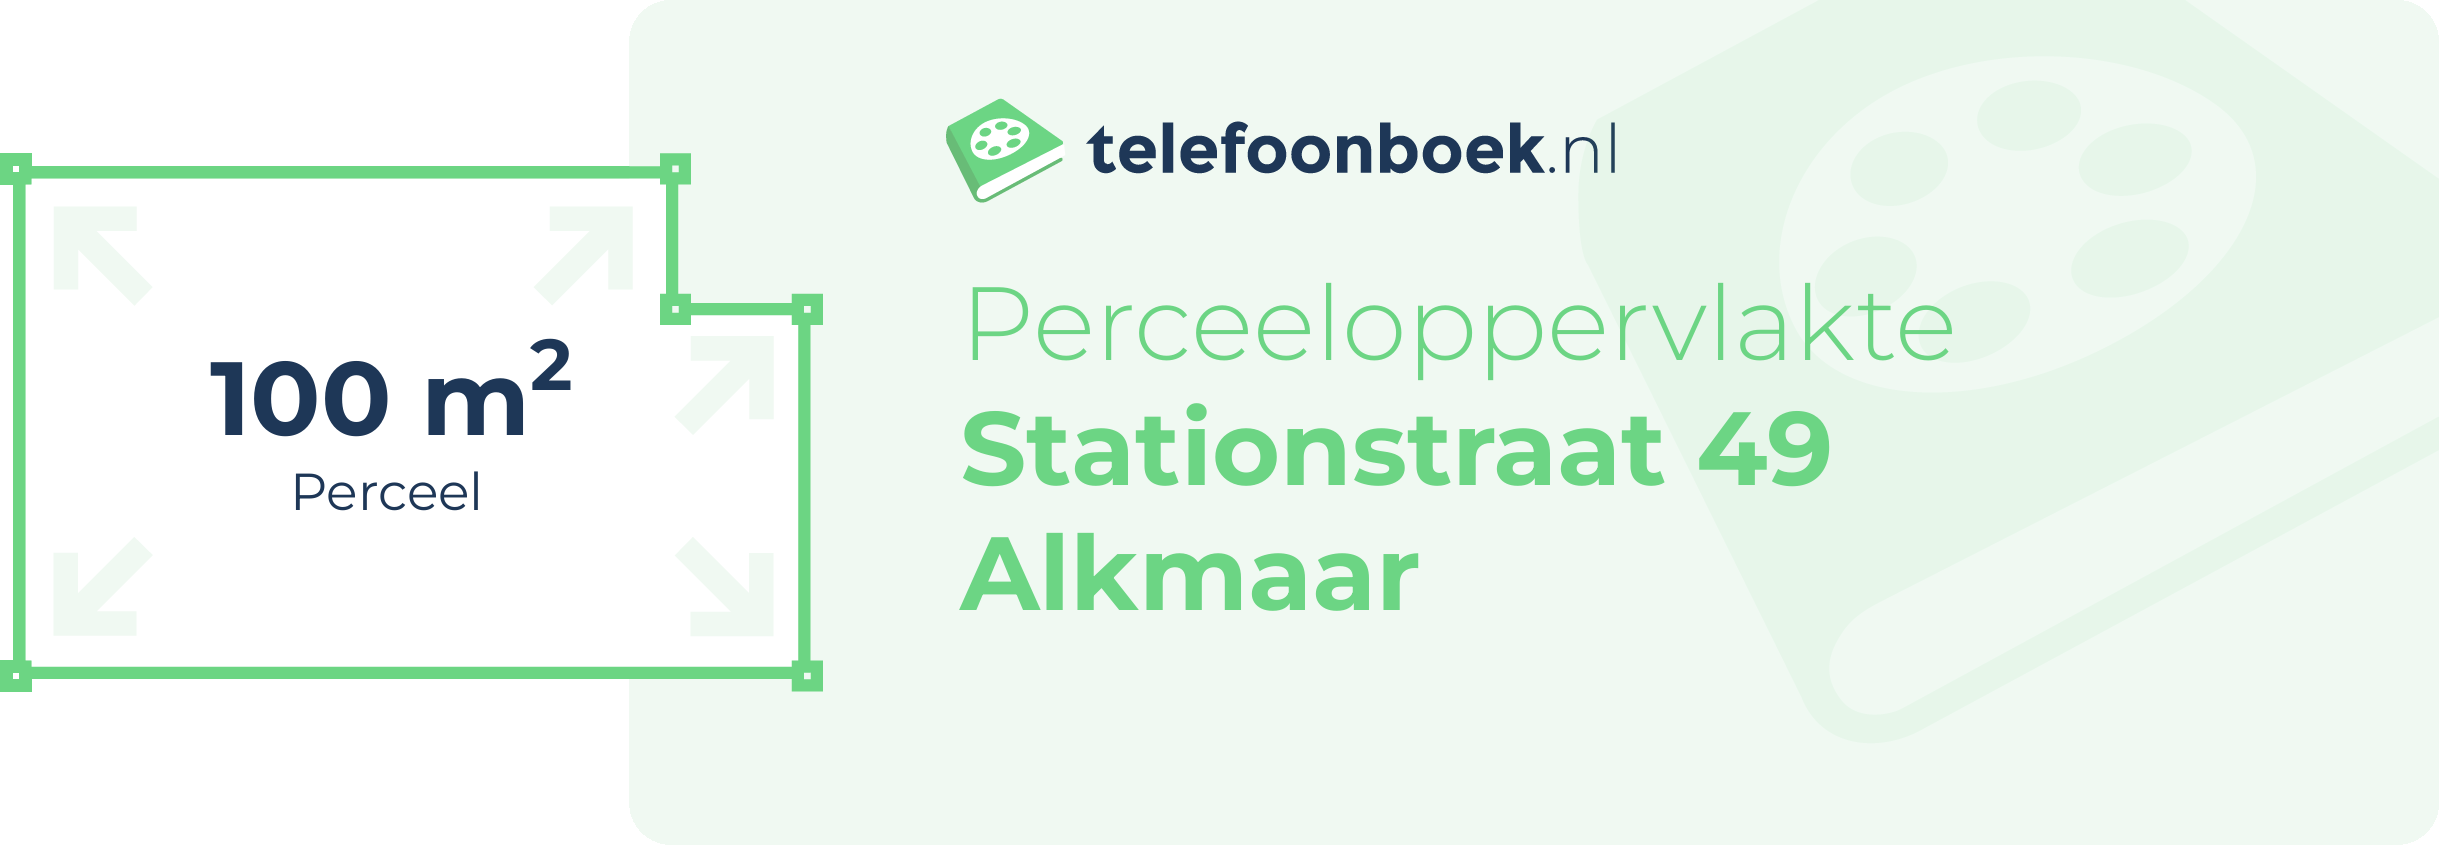 Perceeloppervlakte Stationstraat 49 Alkmaar